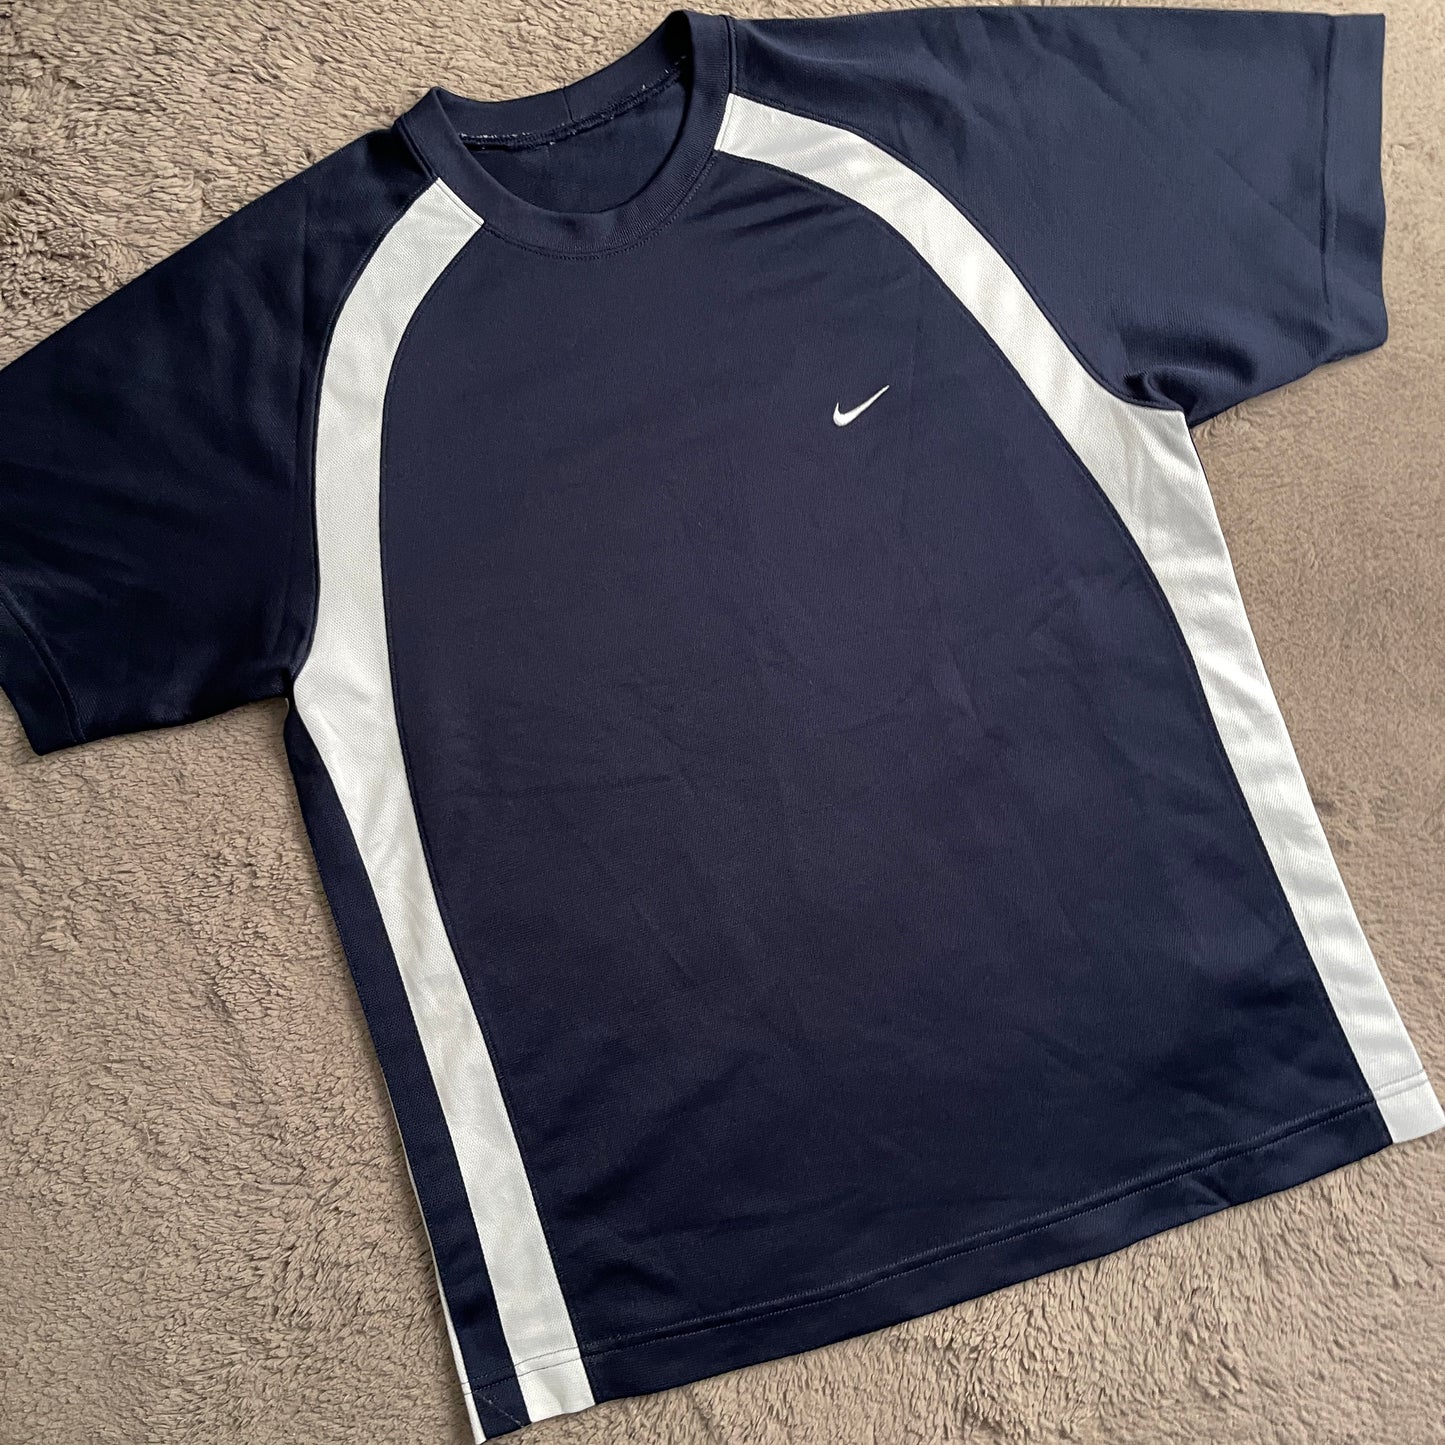 Nike Jersey Shirt (L)